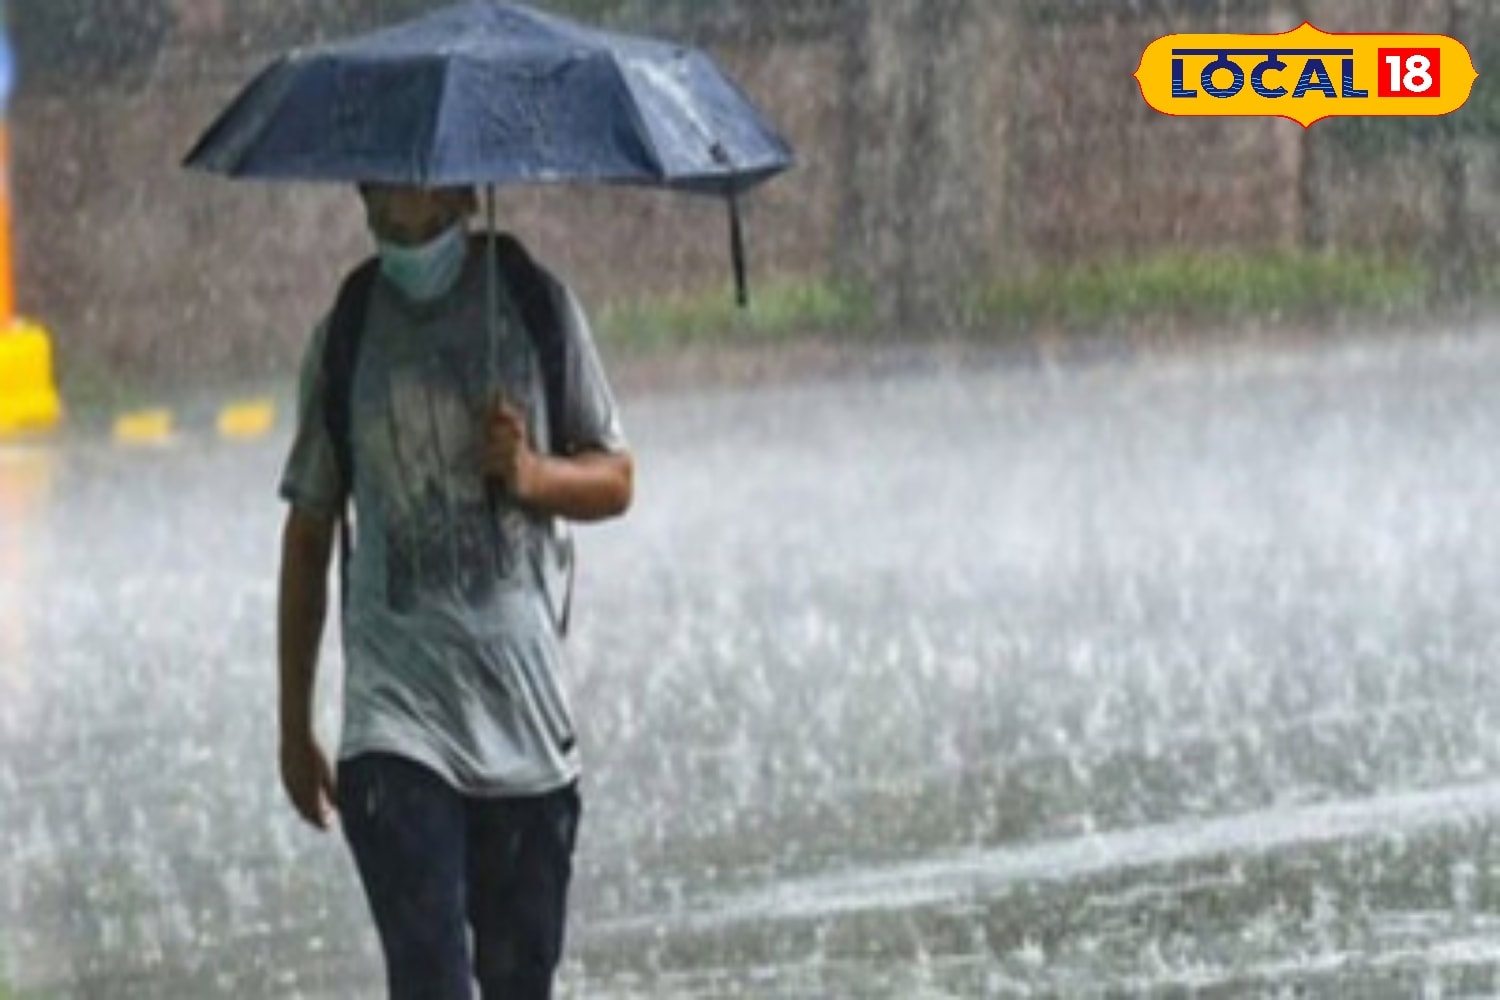 Kolkata Temperature-Rain Alert: পুরুলিয়া- ৩৭.৭ ডিগ্রি সেলসিয়াস (স্বাভাবিকের চেয়ে ১.২ ডিগ্রি বেশি), ব্যারাকপুর- ৩২.৬ ডিগ্রি সেলসিয়াস (স্বাভাবিকের চেয়ে ৩ ডিগ্রি কম), শ্রীনিকেতন- ৩৪.২ ডিগ্রি সেলসিয়াস (স্বাভাবিকের চেয়ে ২ ডিগ্রি কম)।